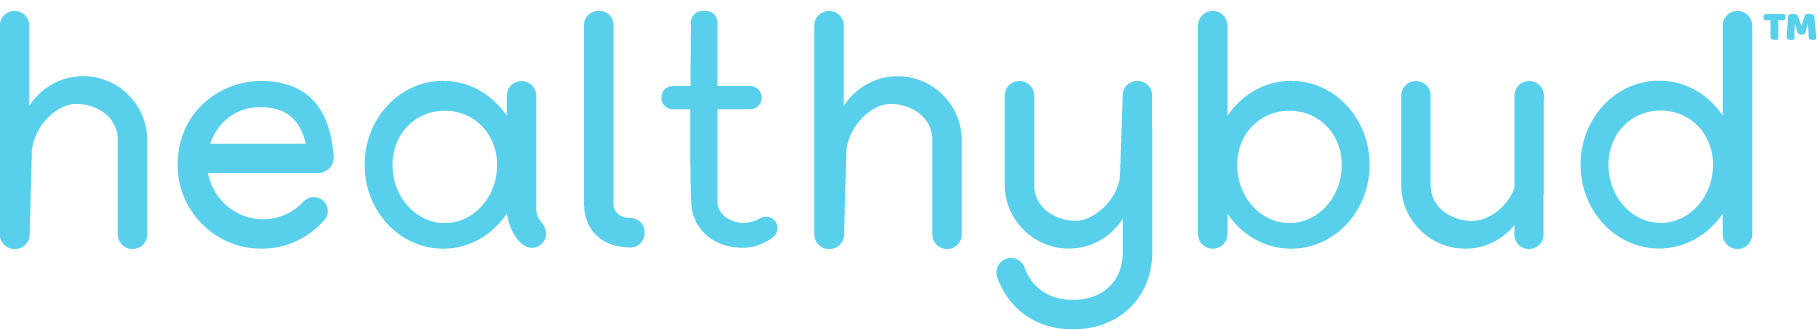 healthybud logo